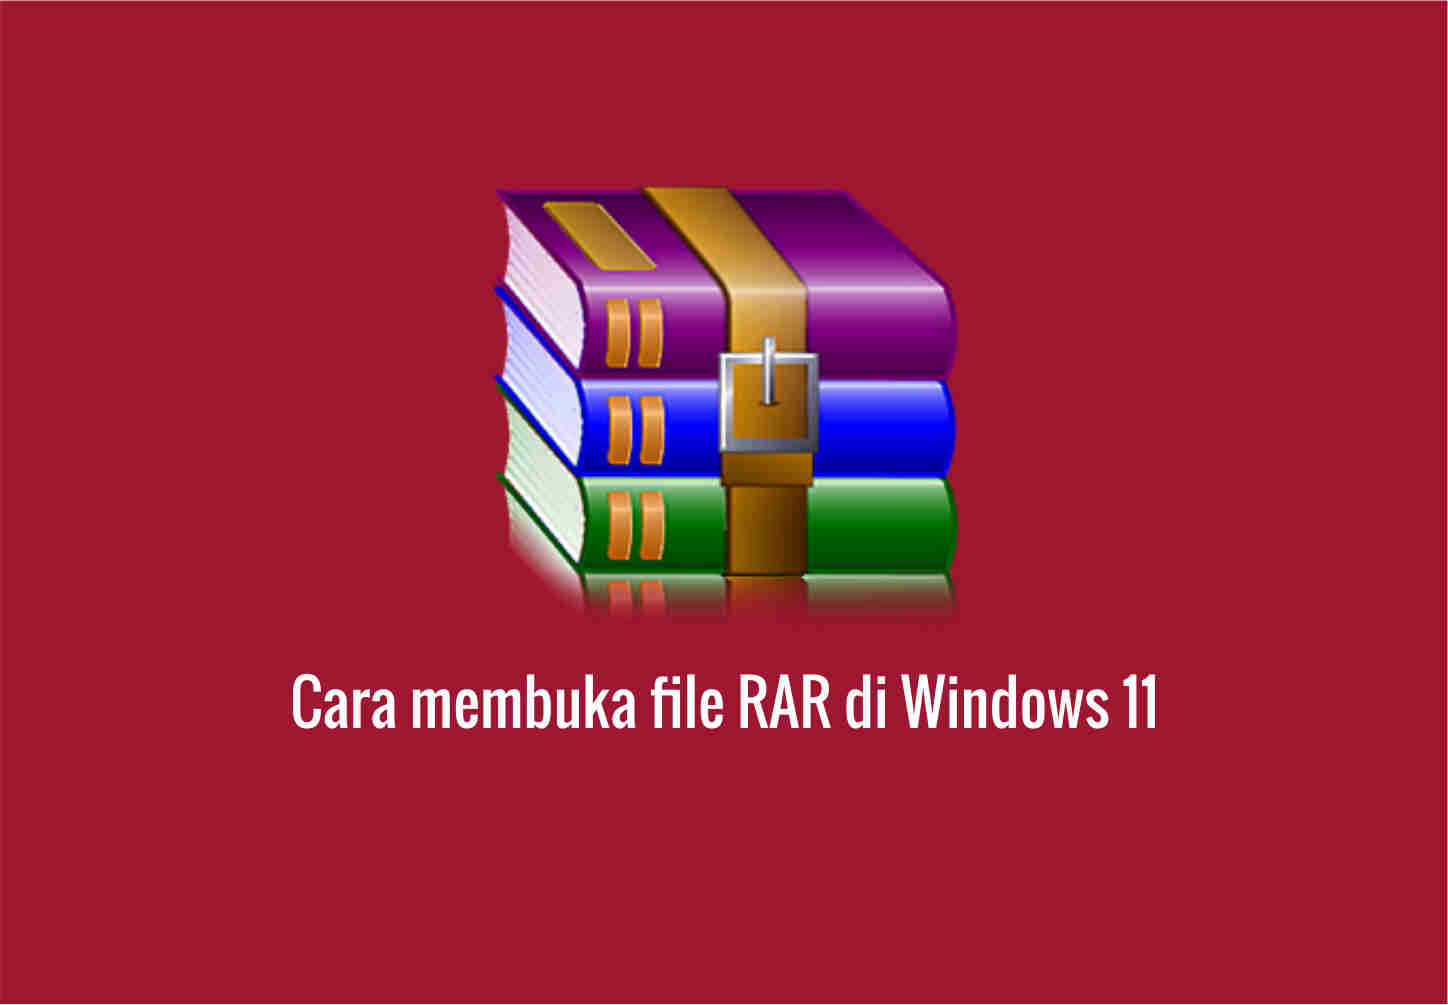 Cara membuka file RAR di Windows 11